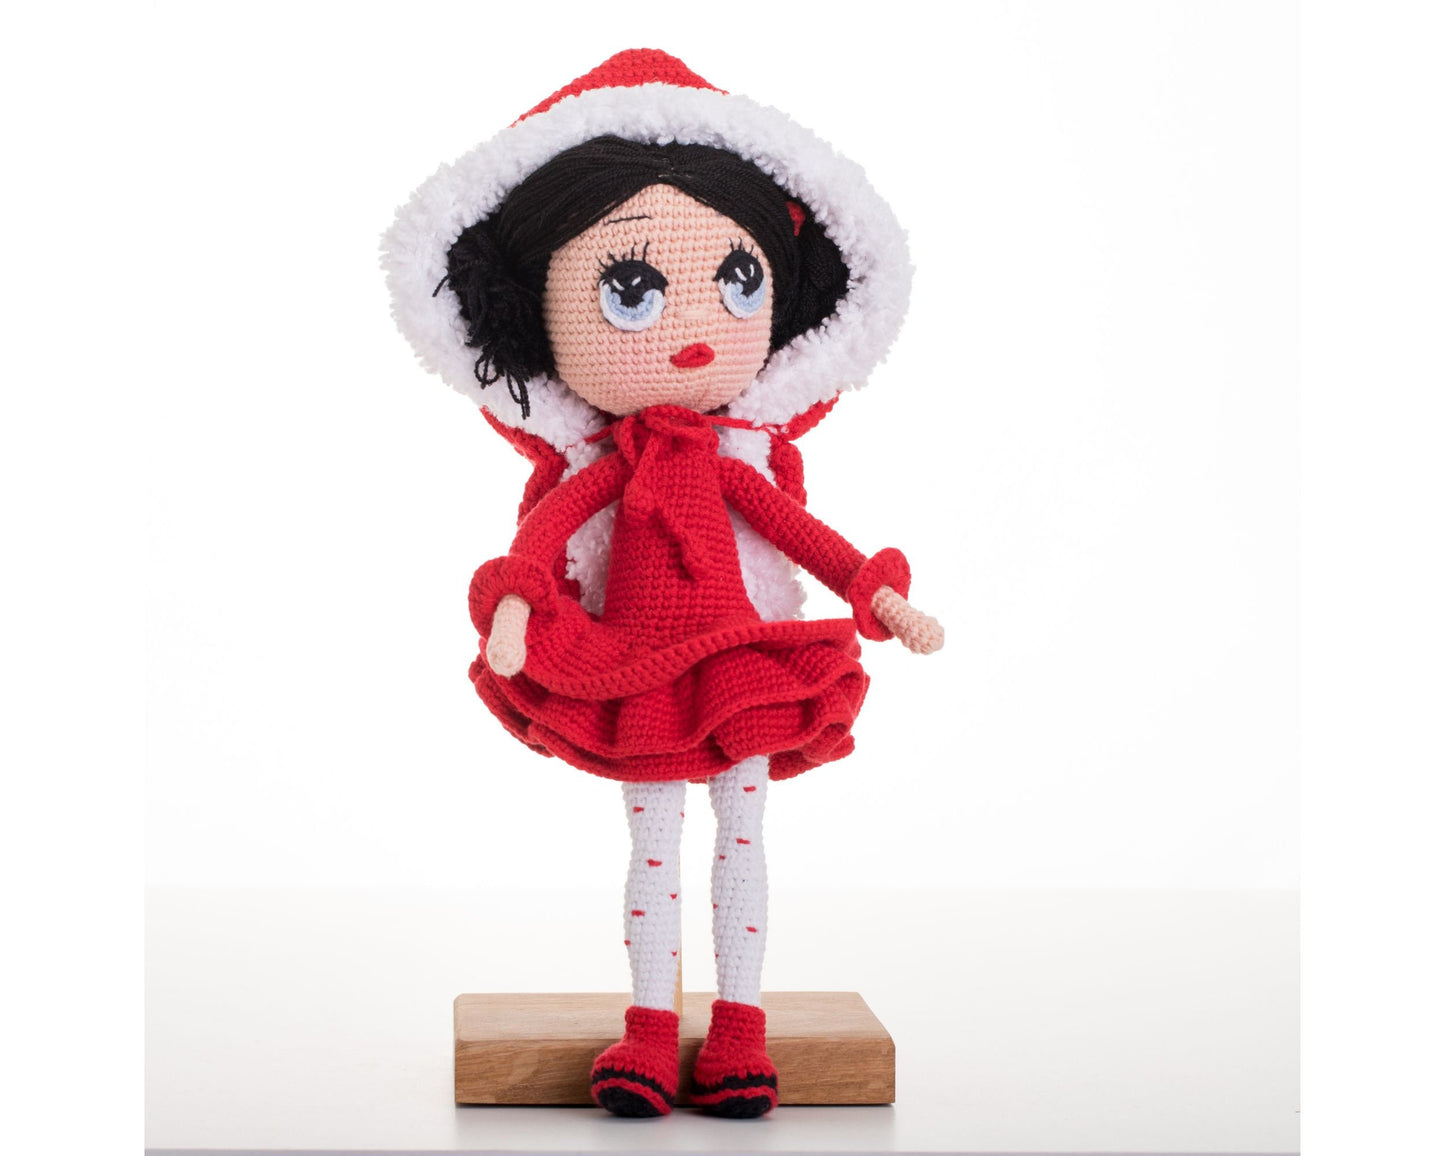 Crochet Doll Little Red Riding Hood, Cute Amigurumi Handmade Doll, CHRISTMAS Gift for Daughter, Soft Handmade Toy Birthday Present for Girls